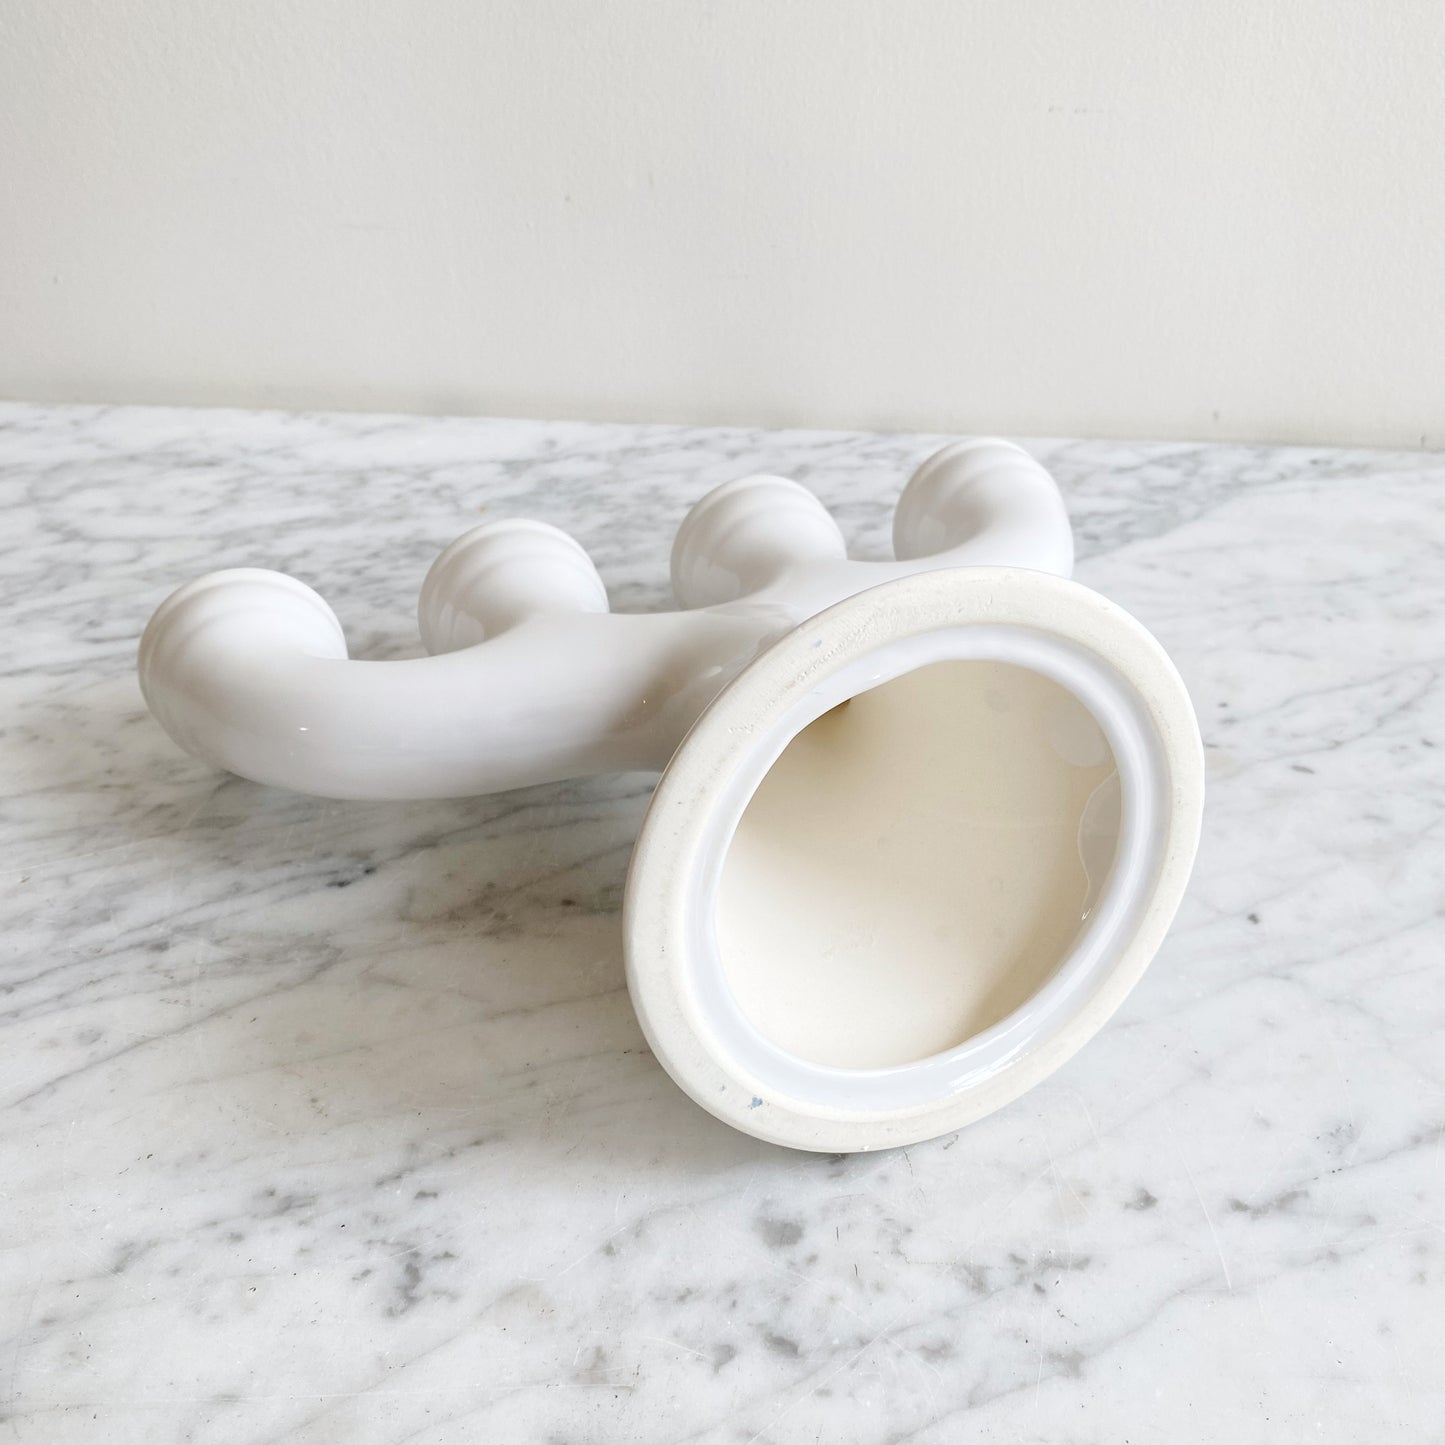 Scandinavian-style White Ceramic Candelabra